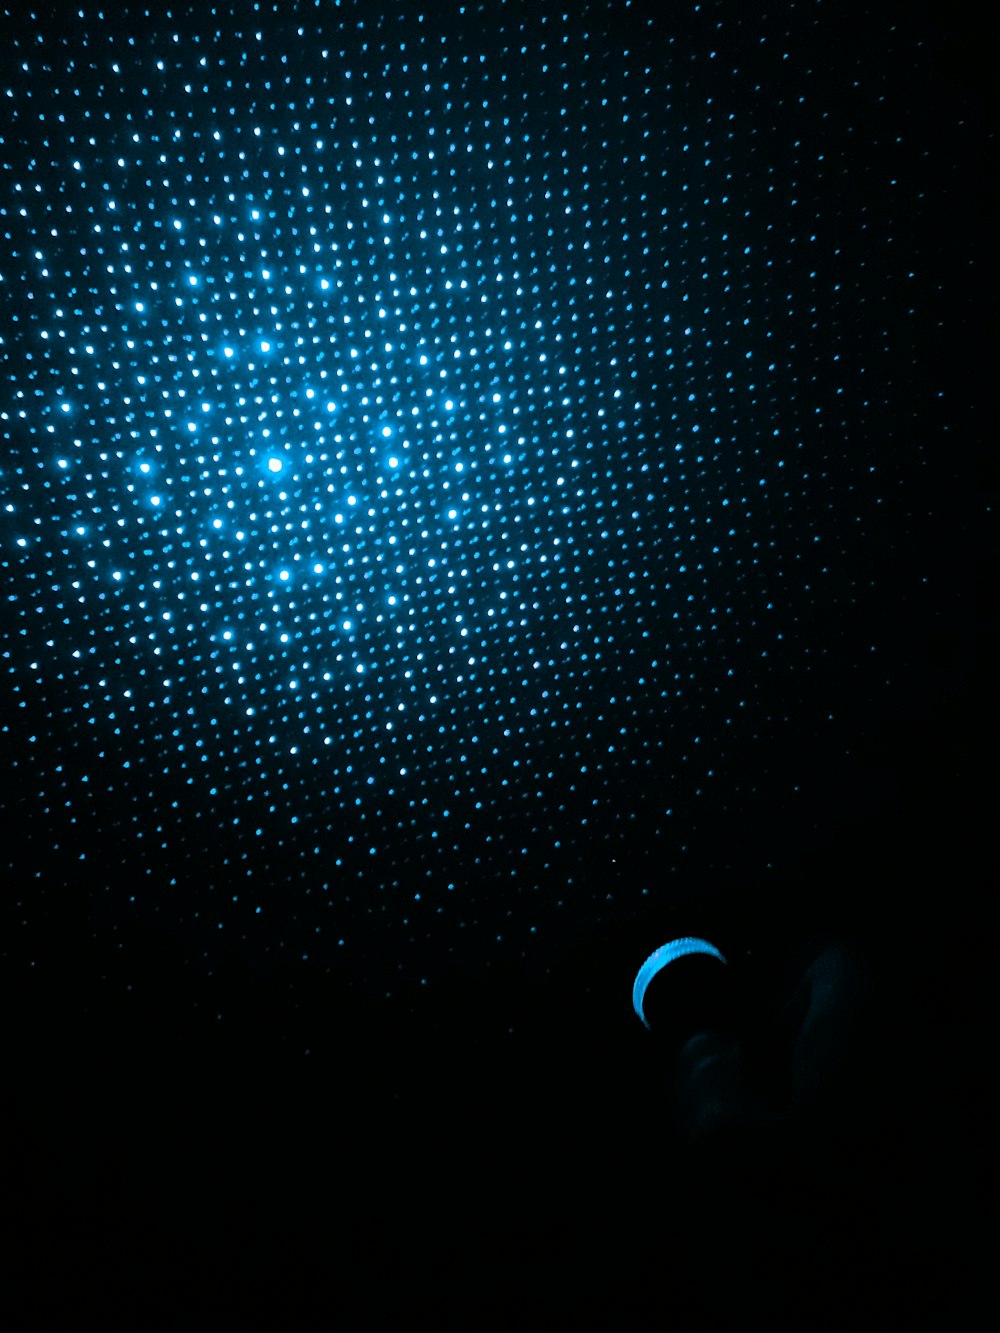 a black background with a blue dot pattern